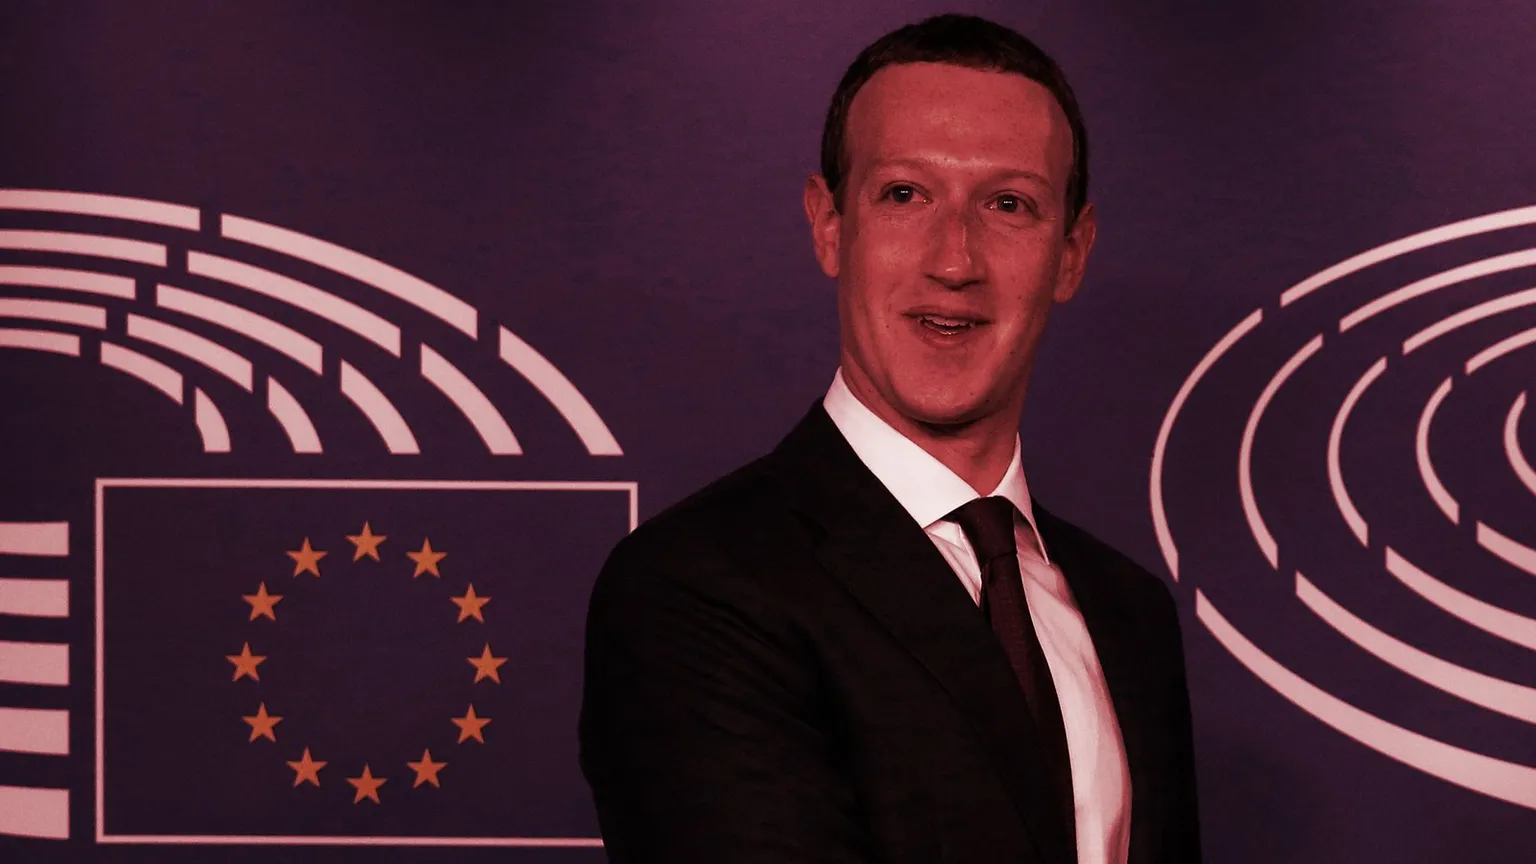 Mark Zuckerberg at the European Parliament in 2018. Image: Shutterstock